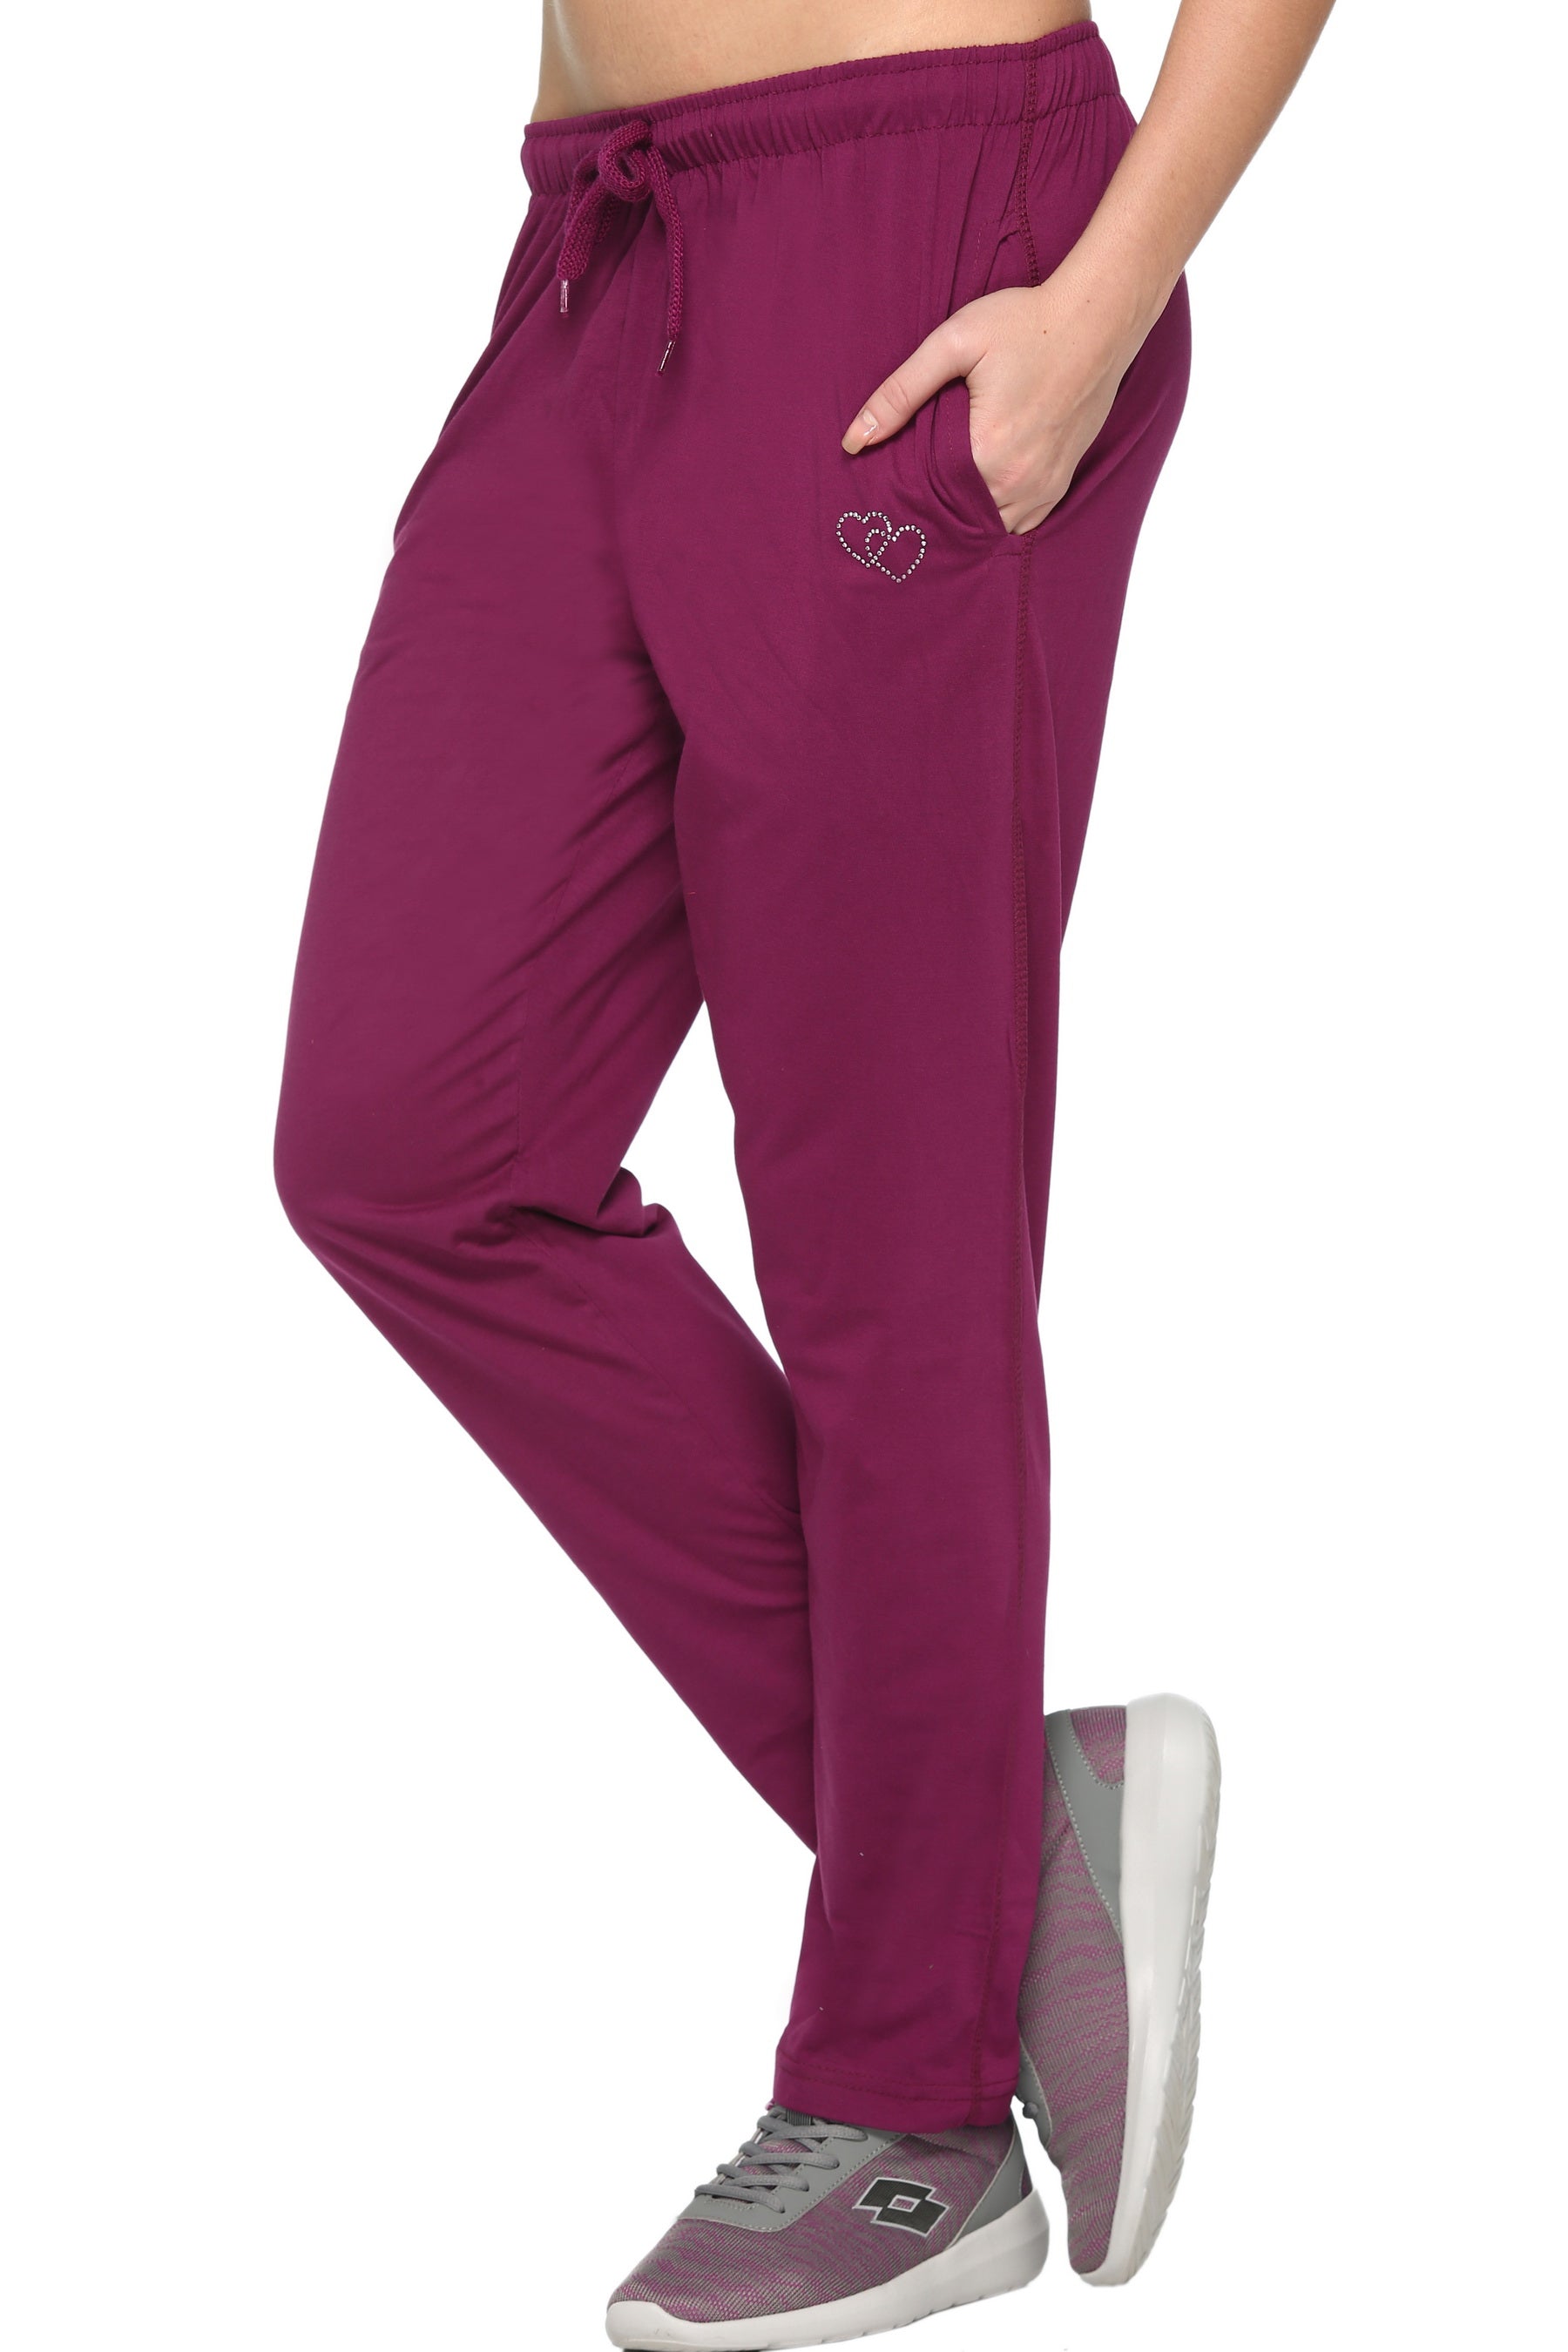 Buy Girls Fashion Track Pant  Purple Online at 54 OFF  Cub McPaws